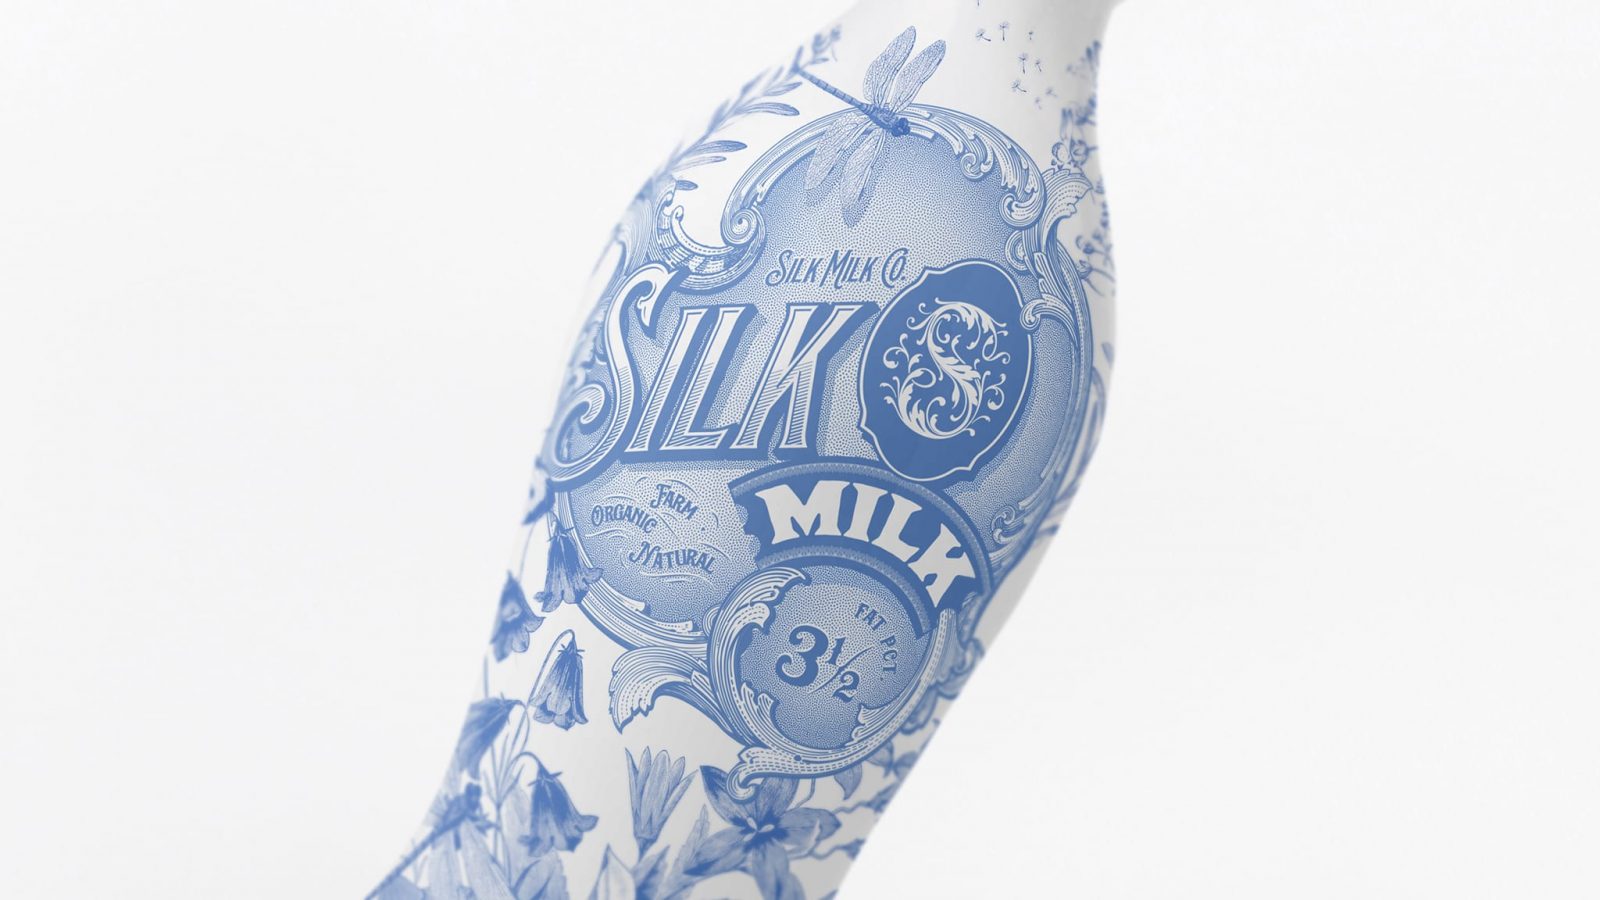 SILK MILK Concept Design Packaging for Milk in Vintage Style